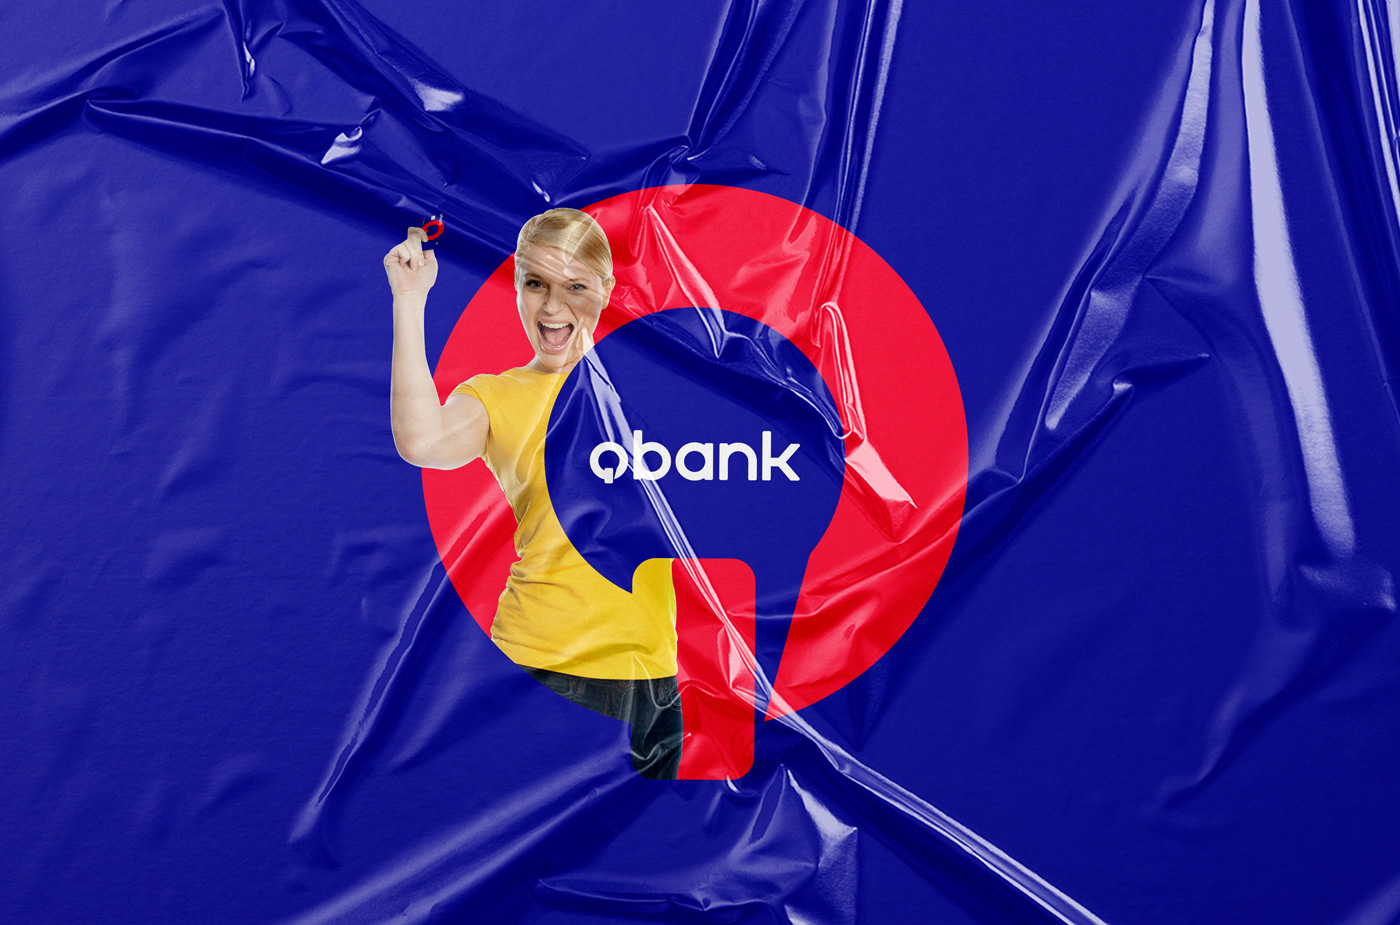 Qbank Technology logo Fintech identity Bank banco identidade visual Startup brand